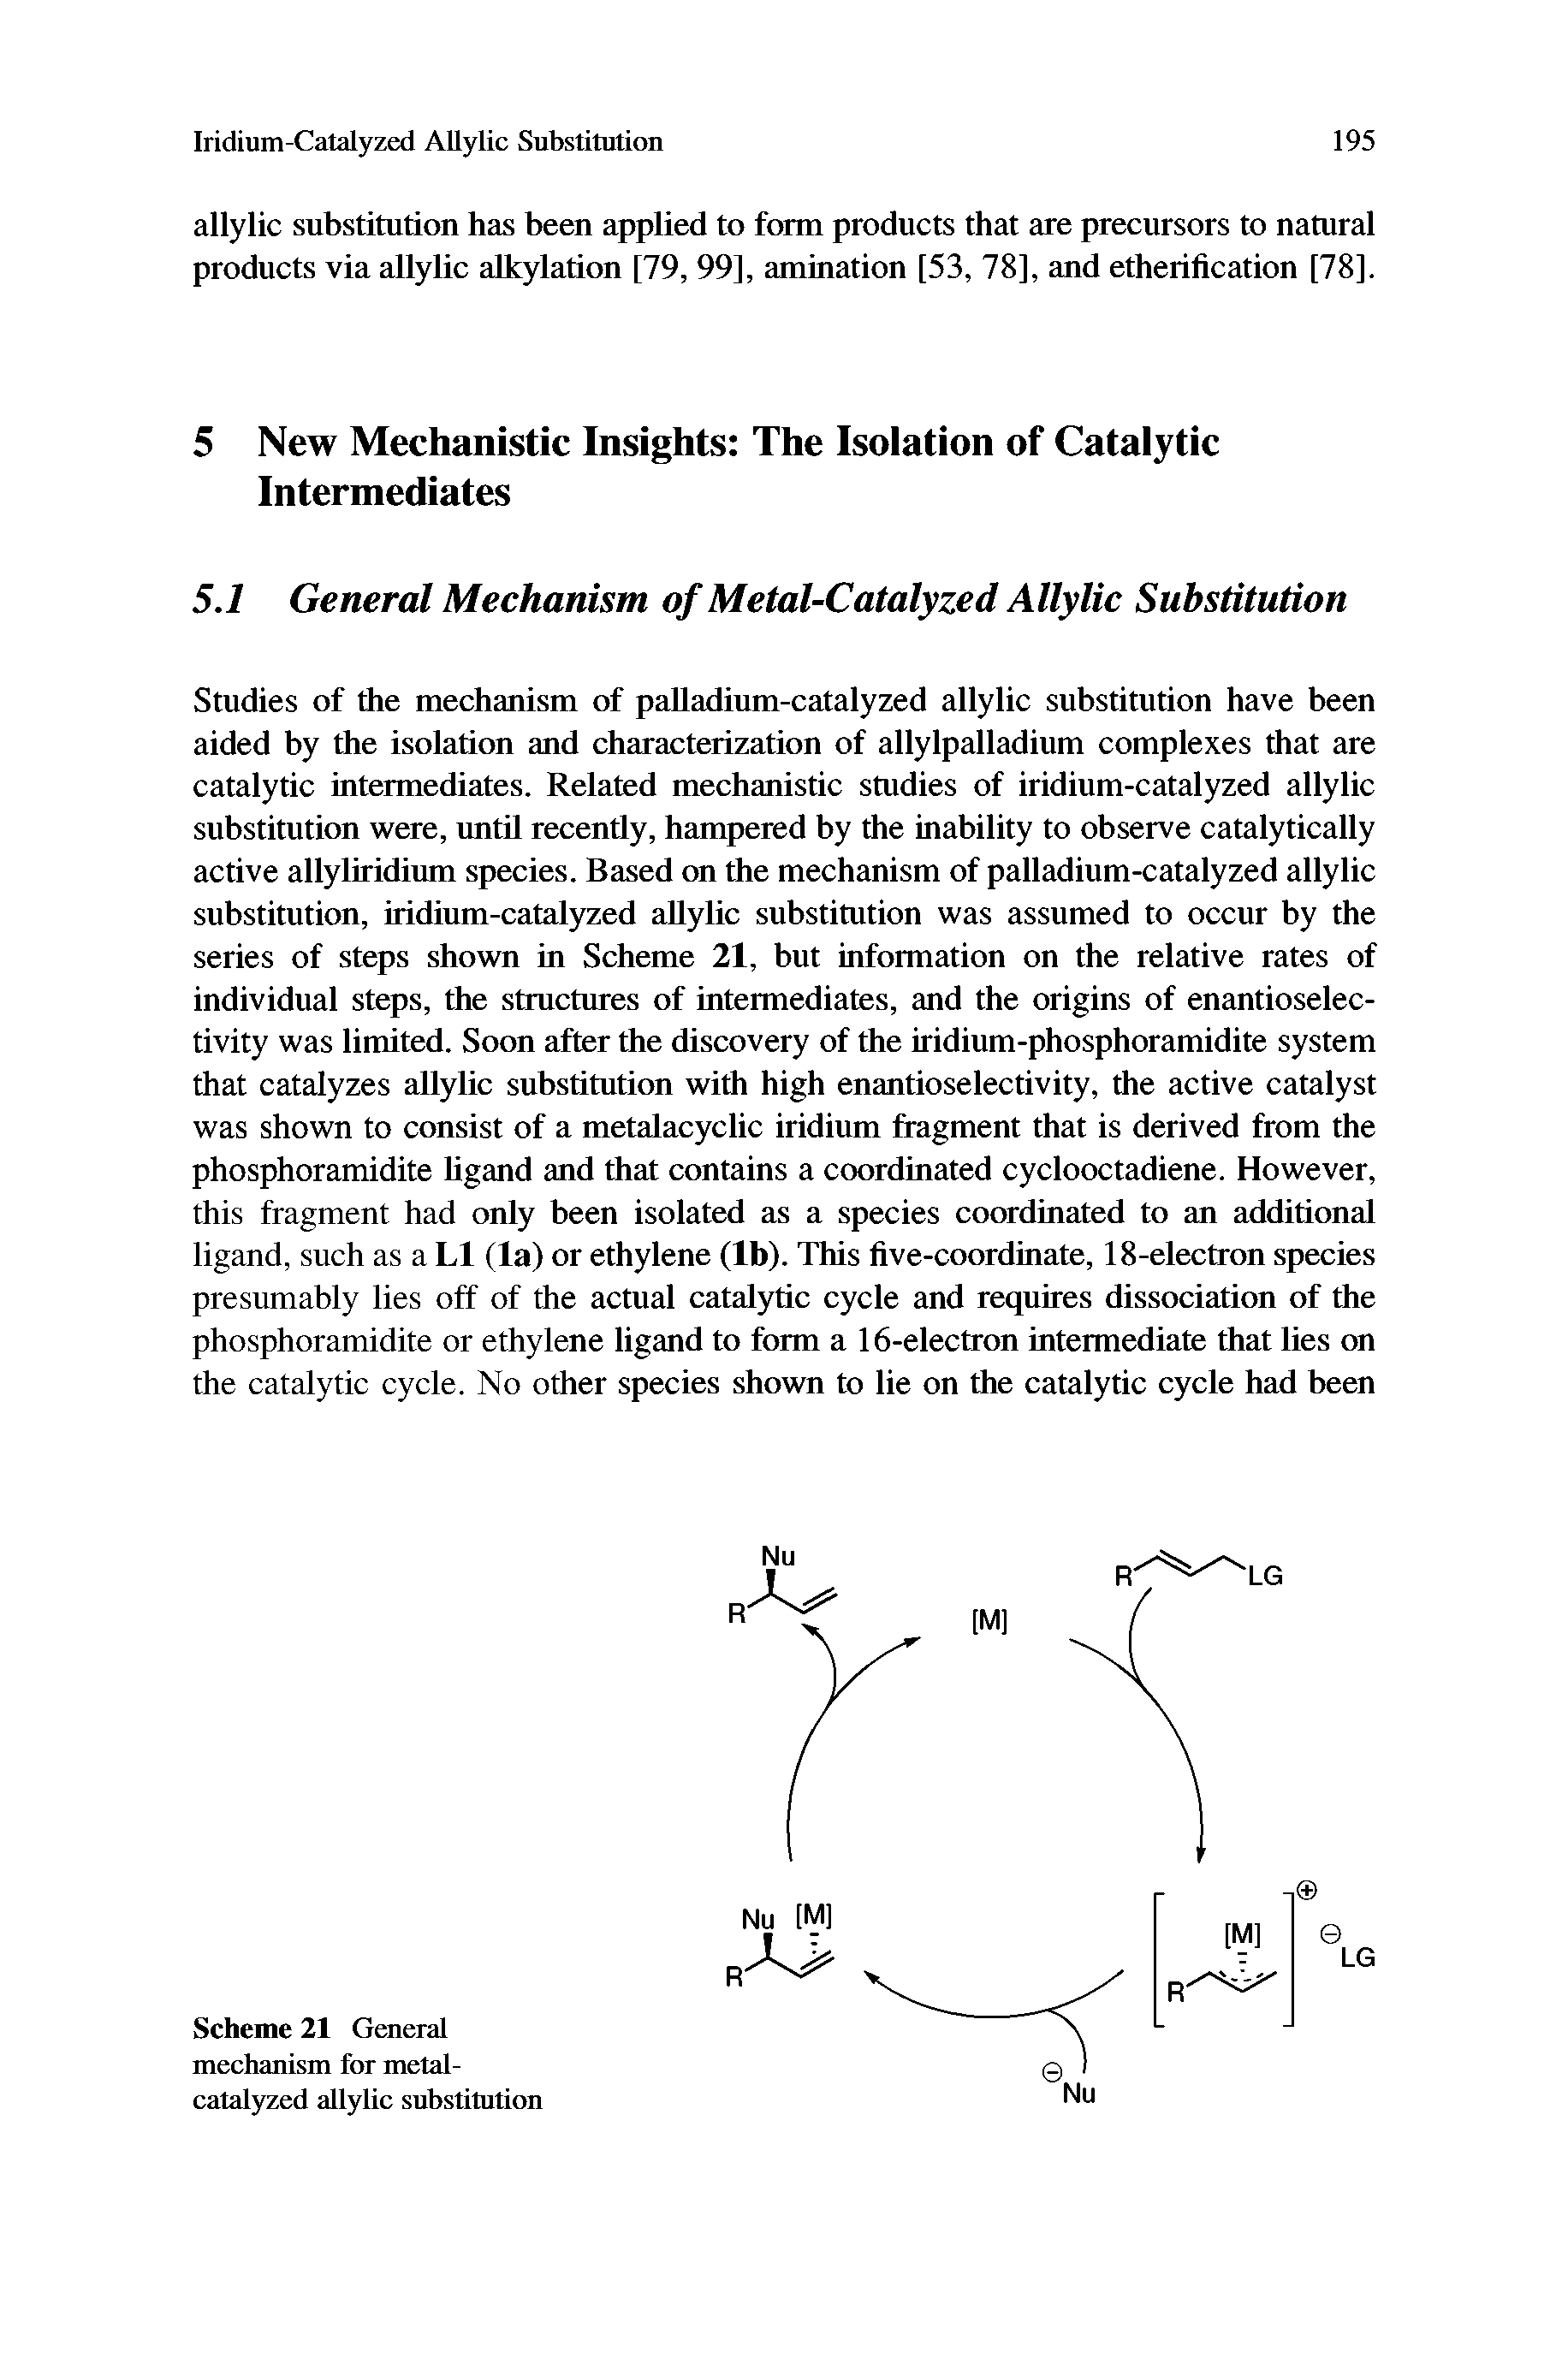 Scheme 21 General mechanism for metal-catalyzed allylic substitution...